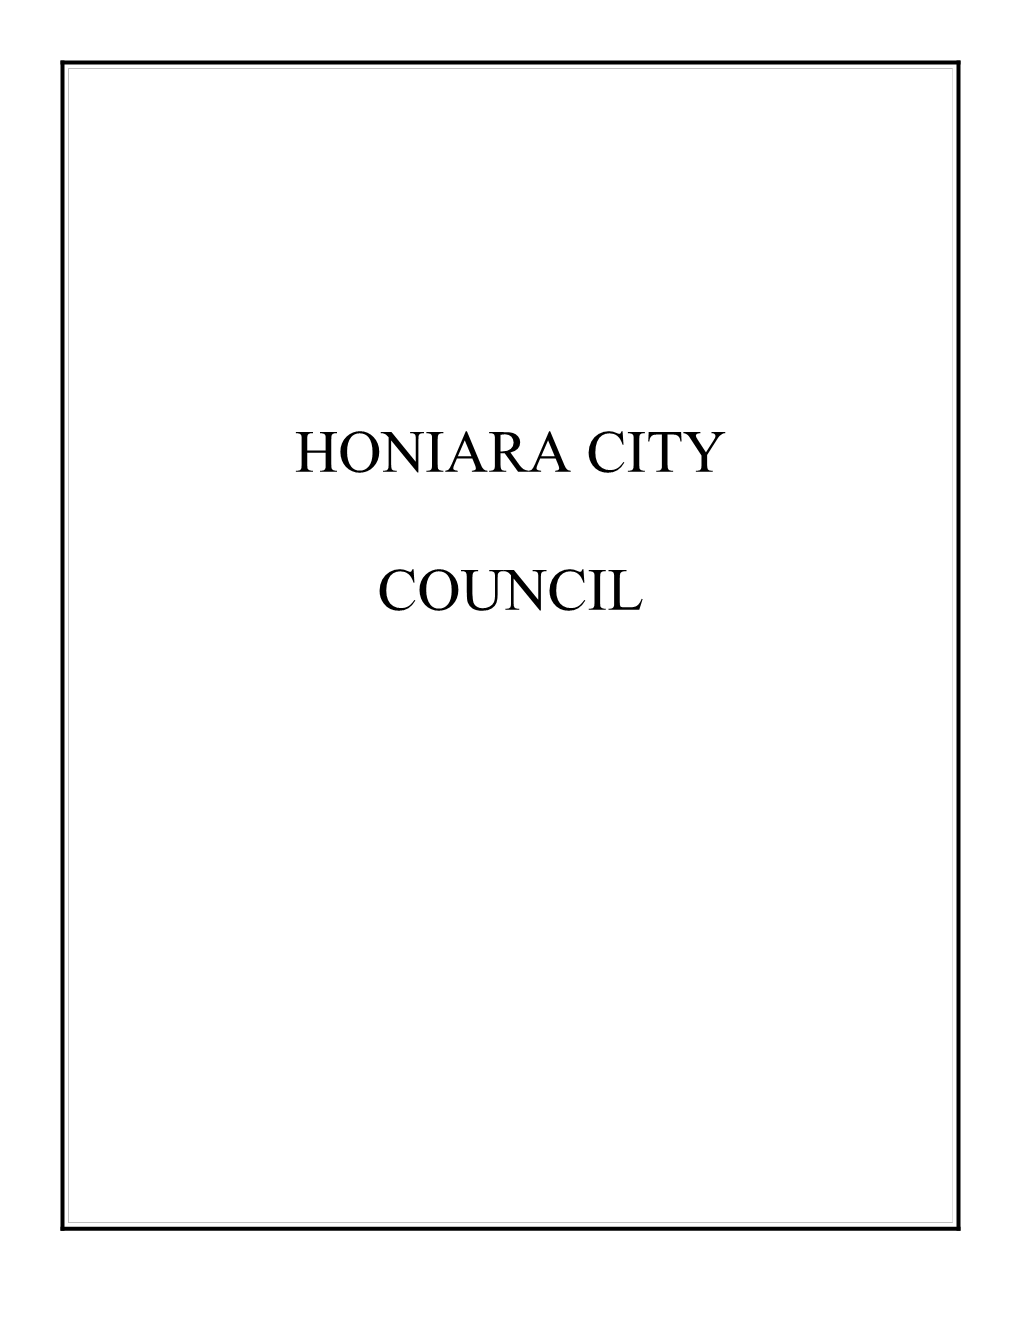 Table P01-1. Age, Sex, and Marital Status by Ward of Enumeration, Honiara City Council: 1999